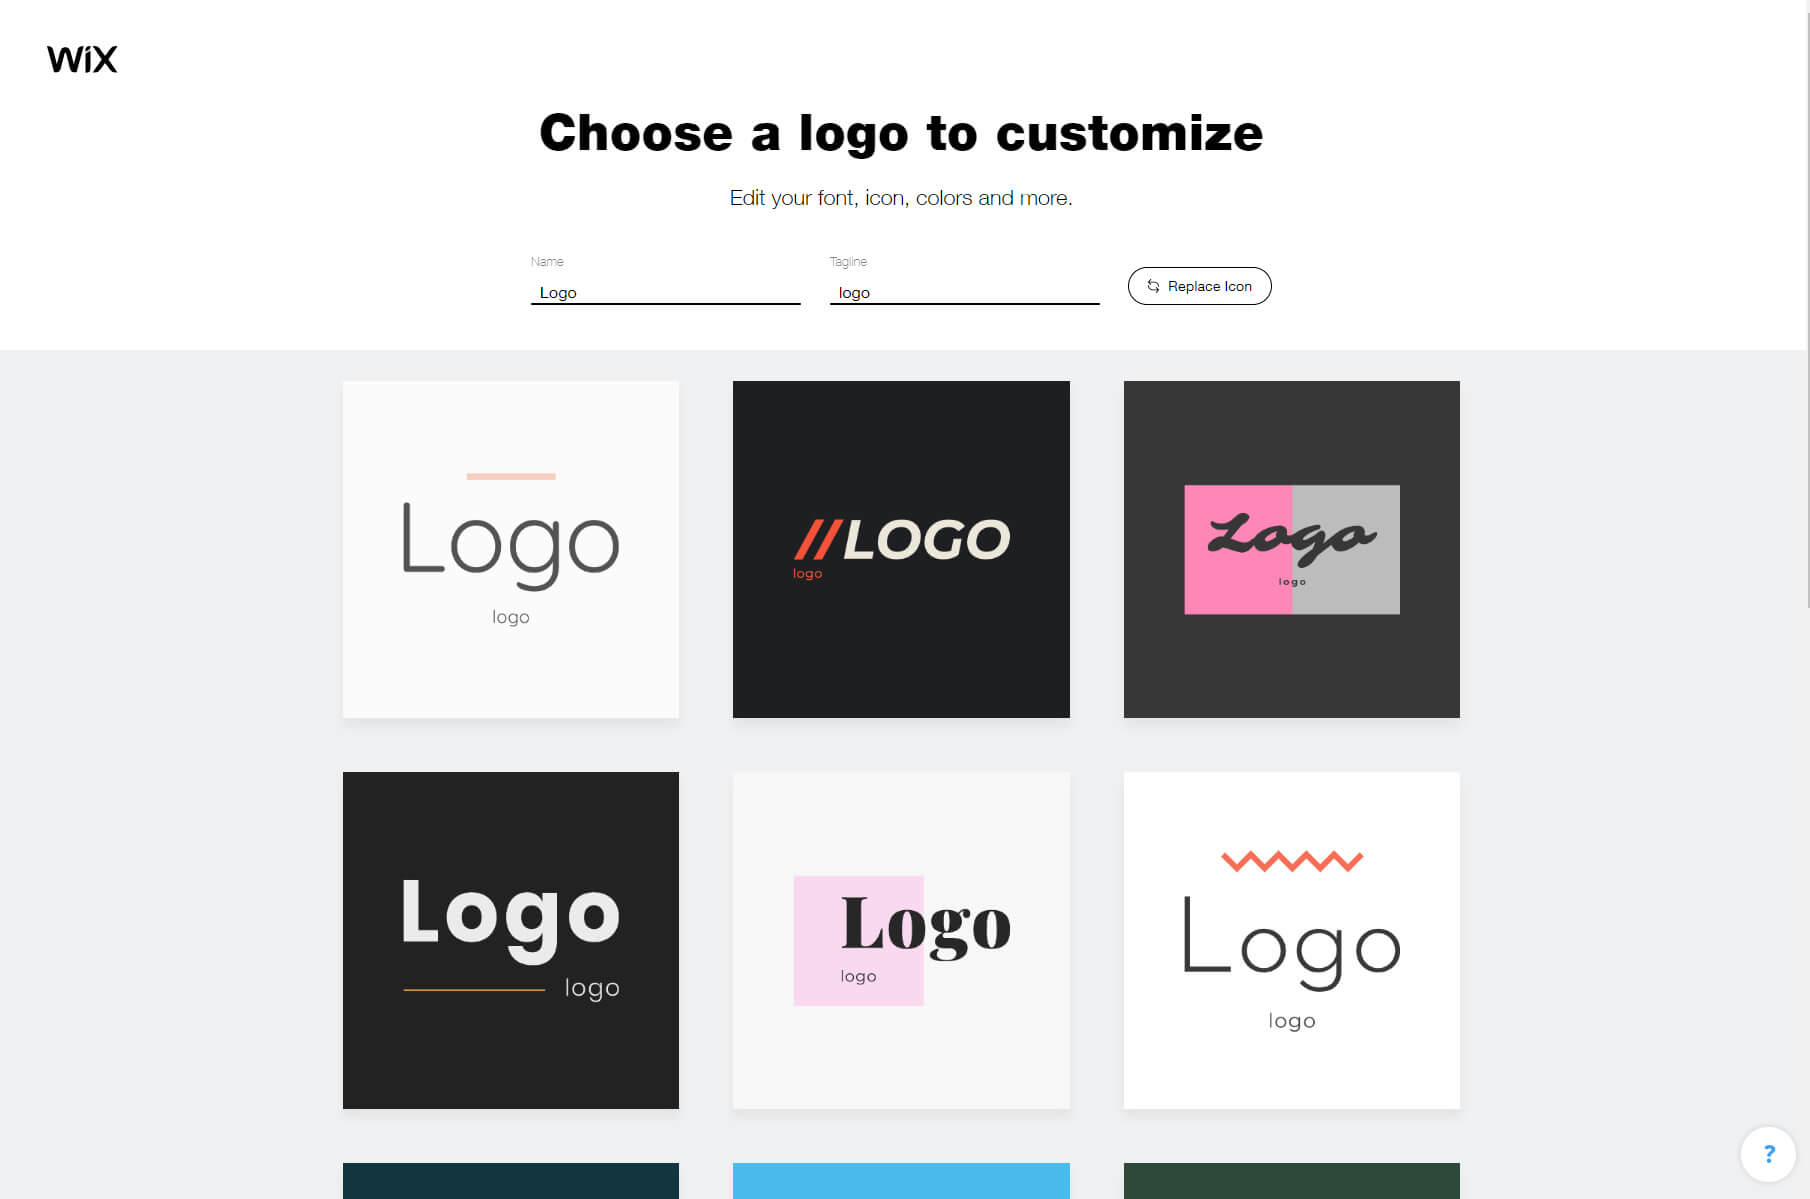 Choose a logo to customize